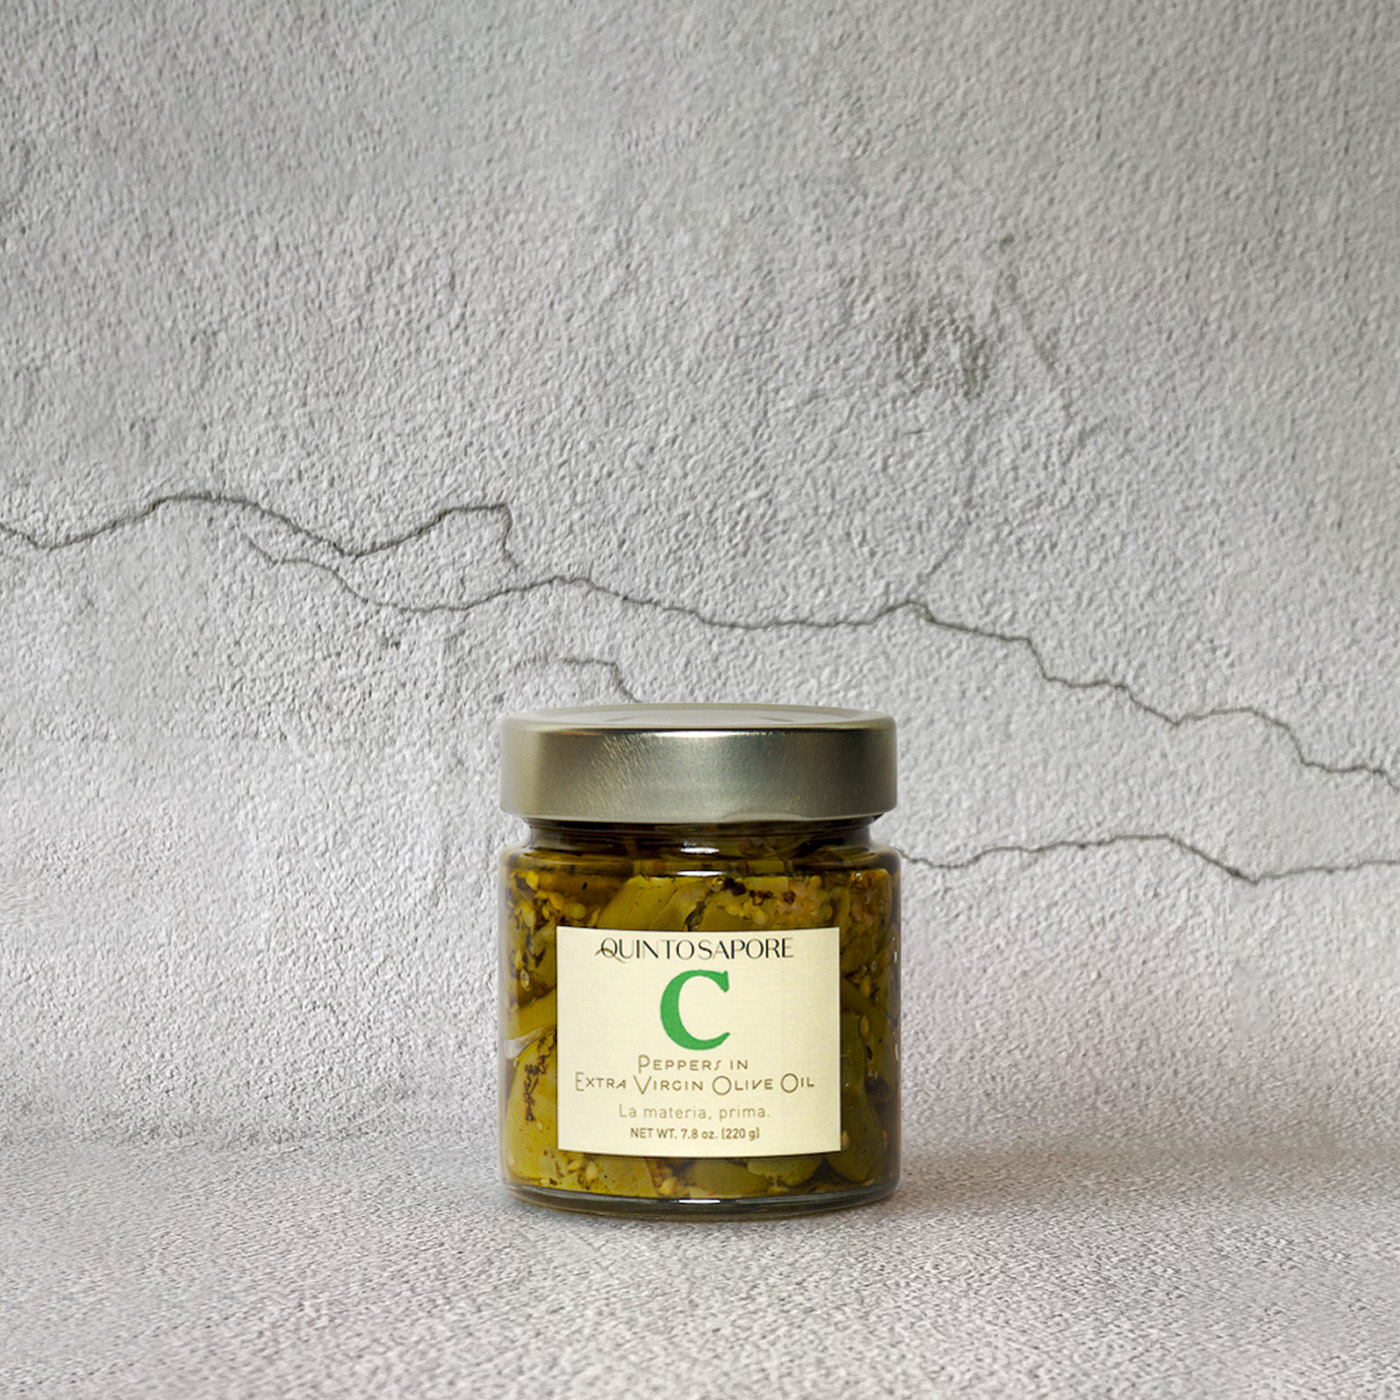 Santocielo - Product Carousel - Peperoni sott'olio